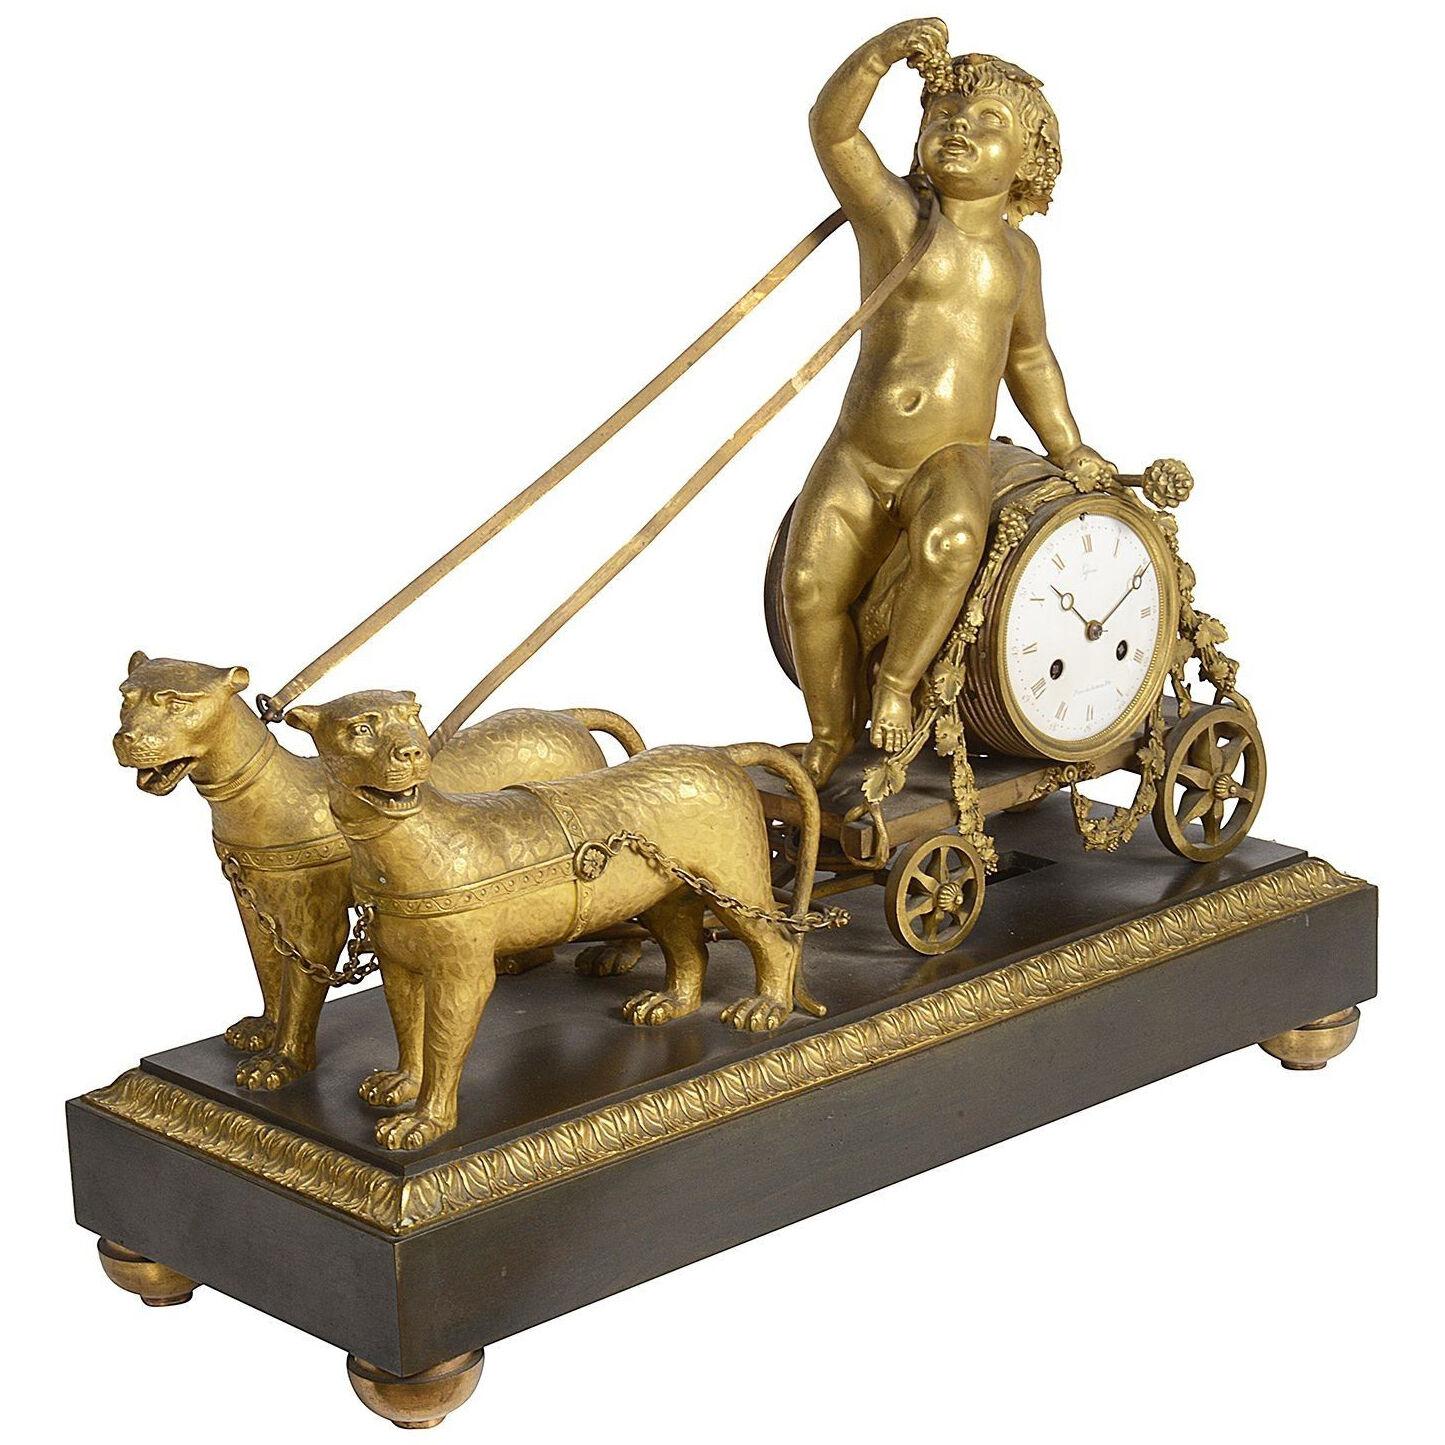 Fine French Empire period mantel clock by Lépine.